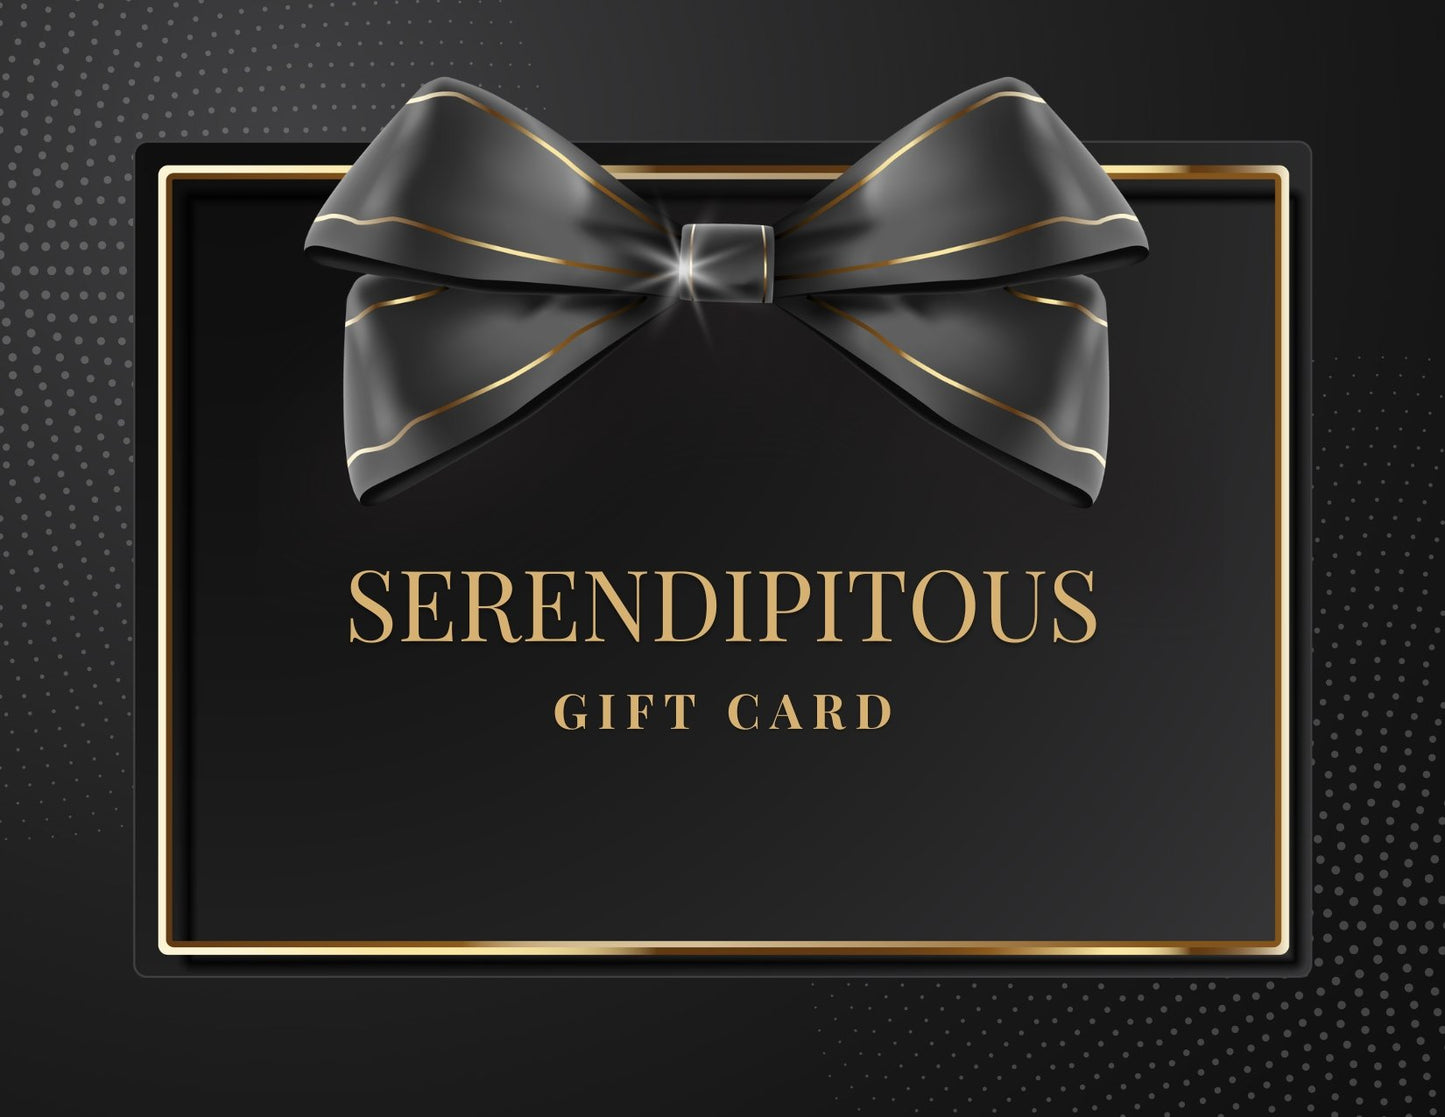 Serendipitous Gift Card